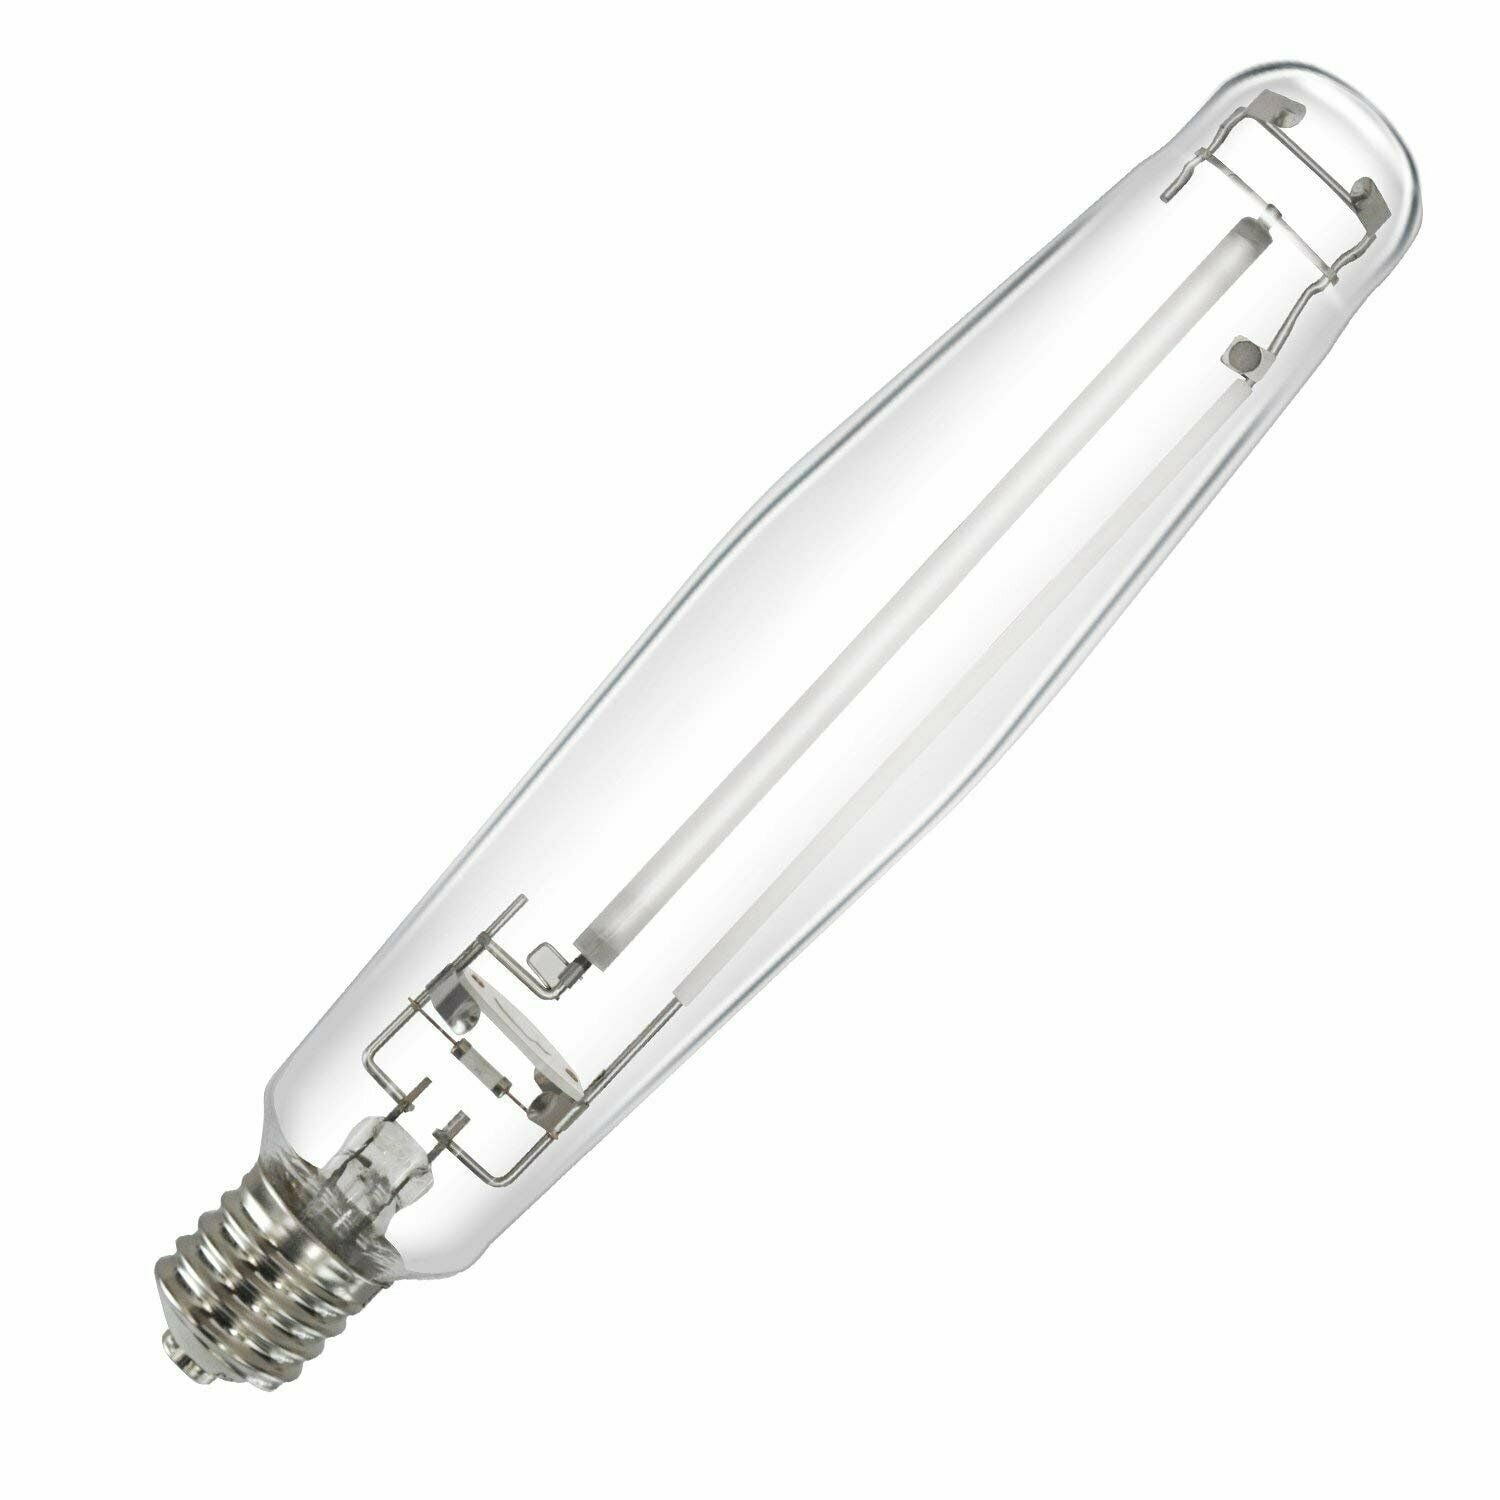 iPower GLBULBM600 600W Metal Halide Grow Light Bulb for sale online 